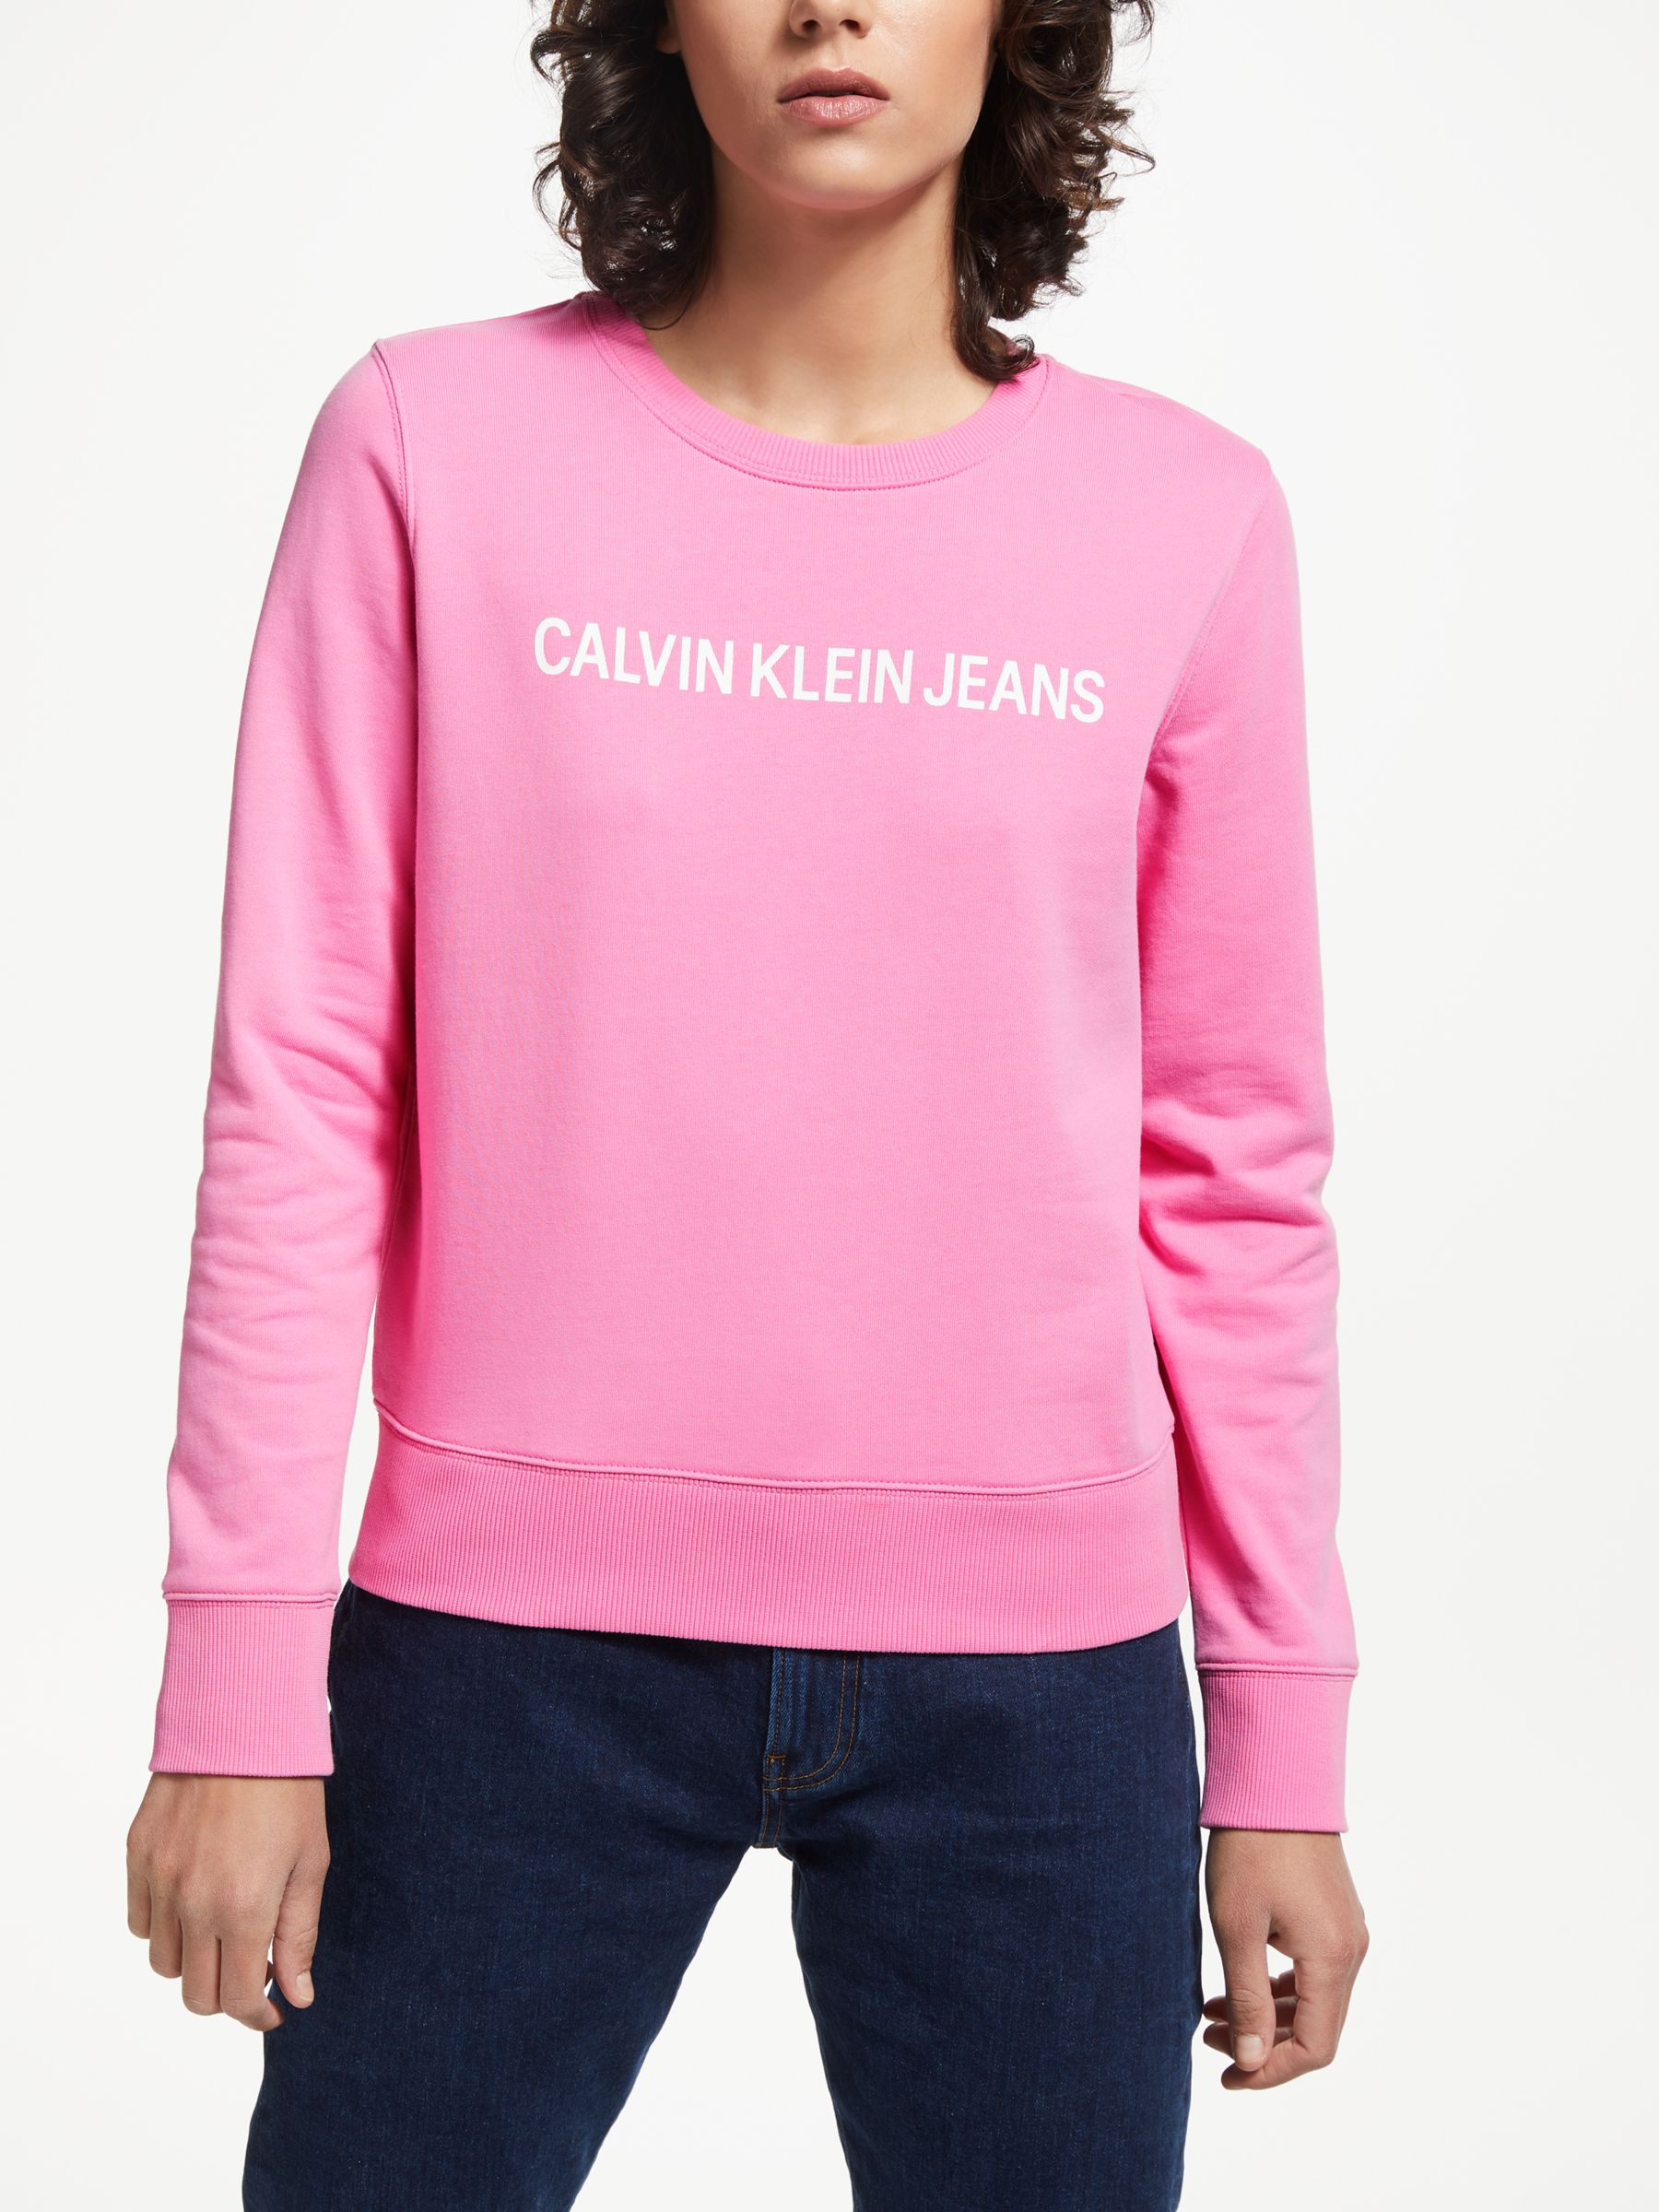 calvin klein ladies sweaters